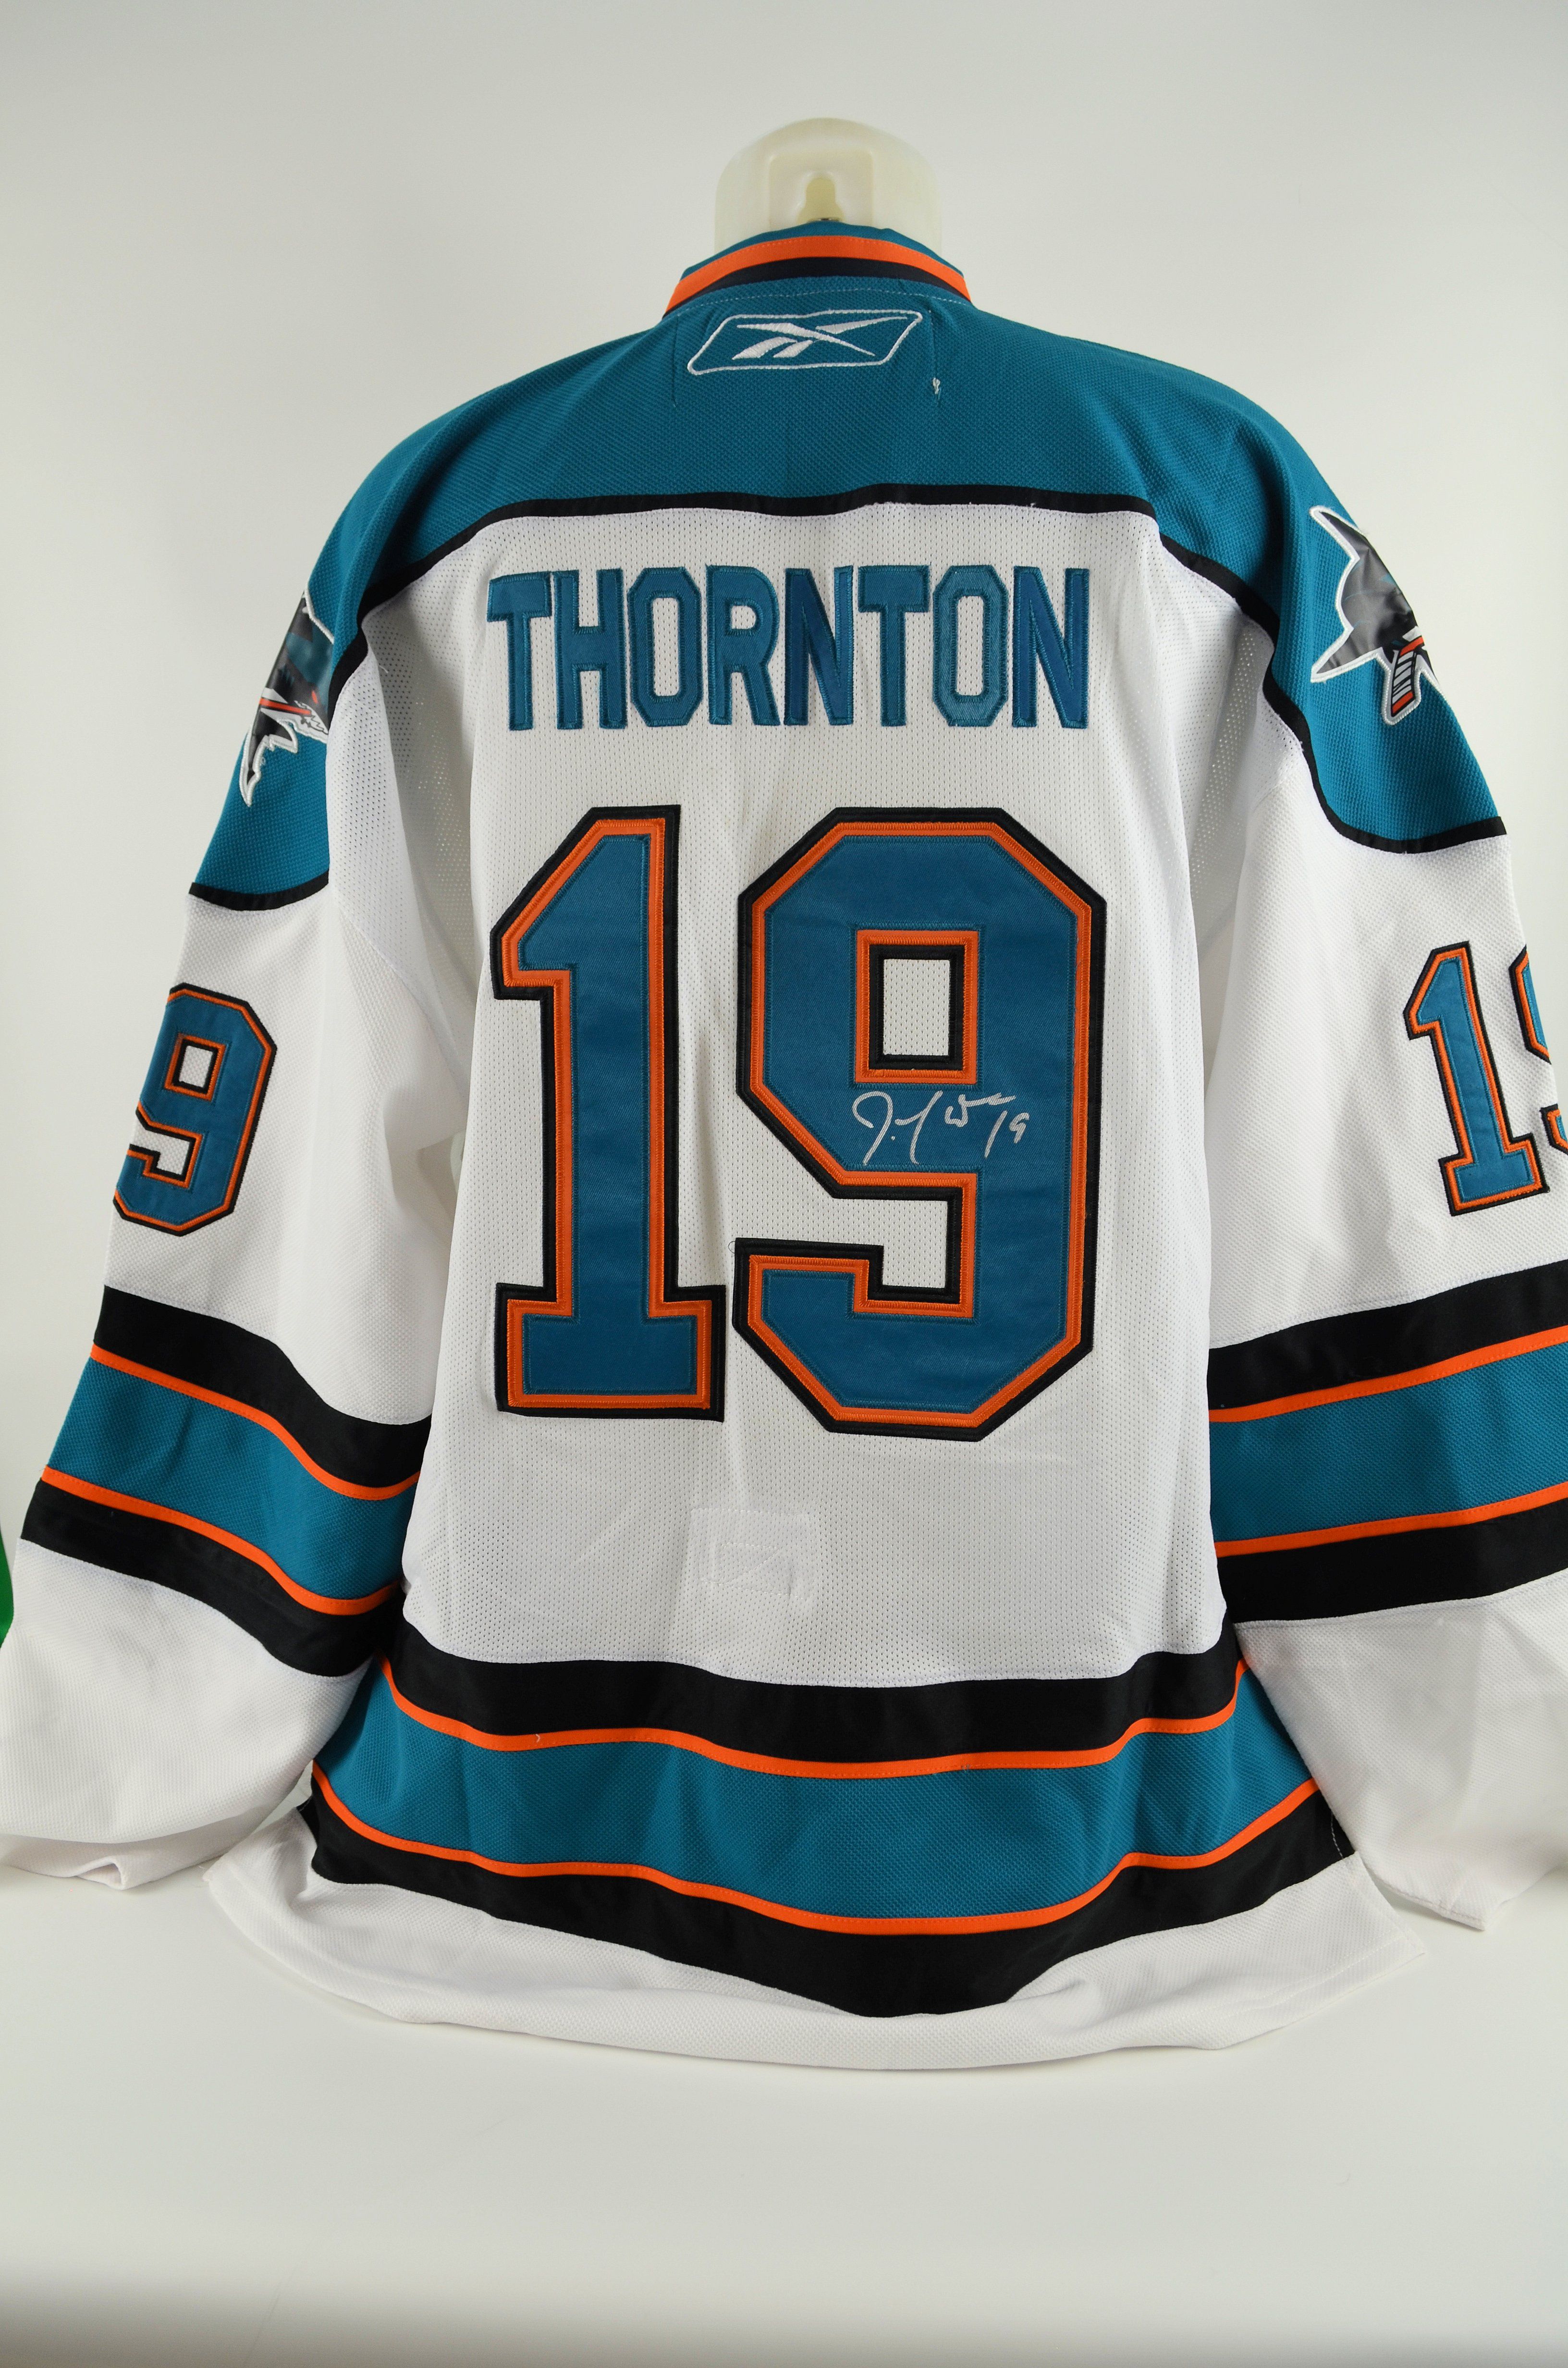 joe thornton autographed jersey